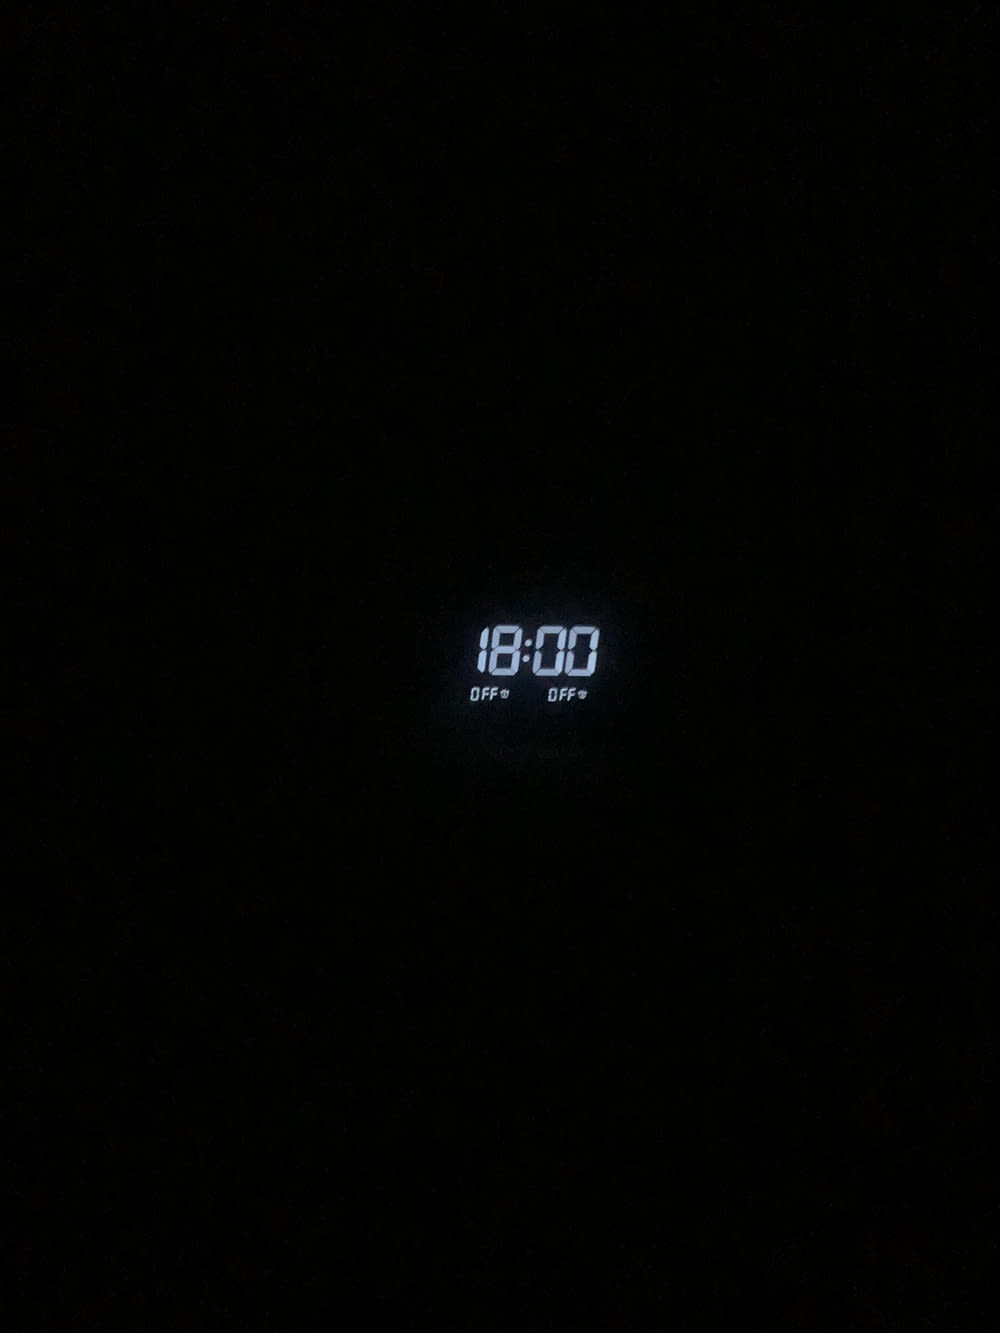 a digital clock is displayed in the dark